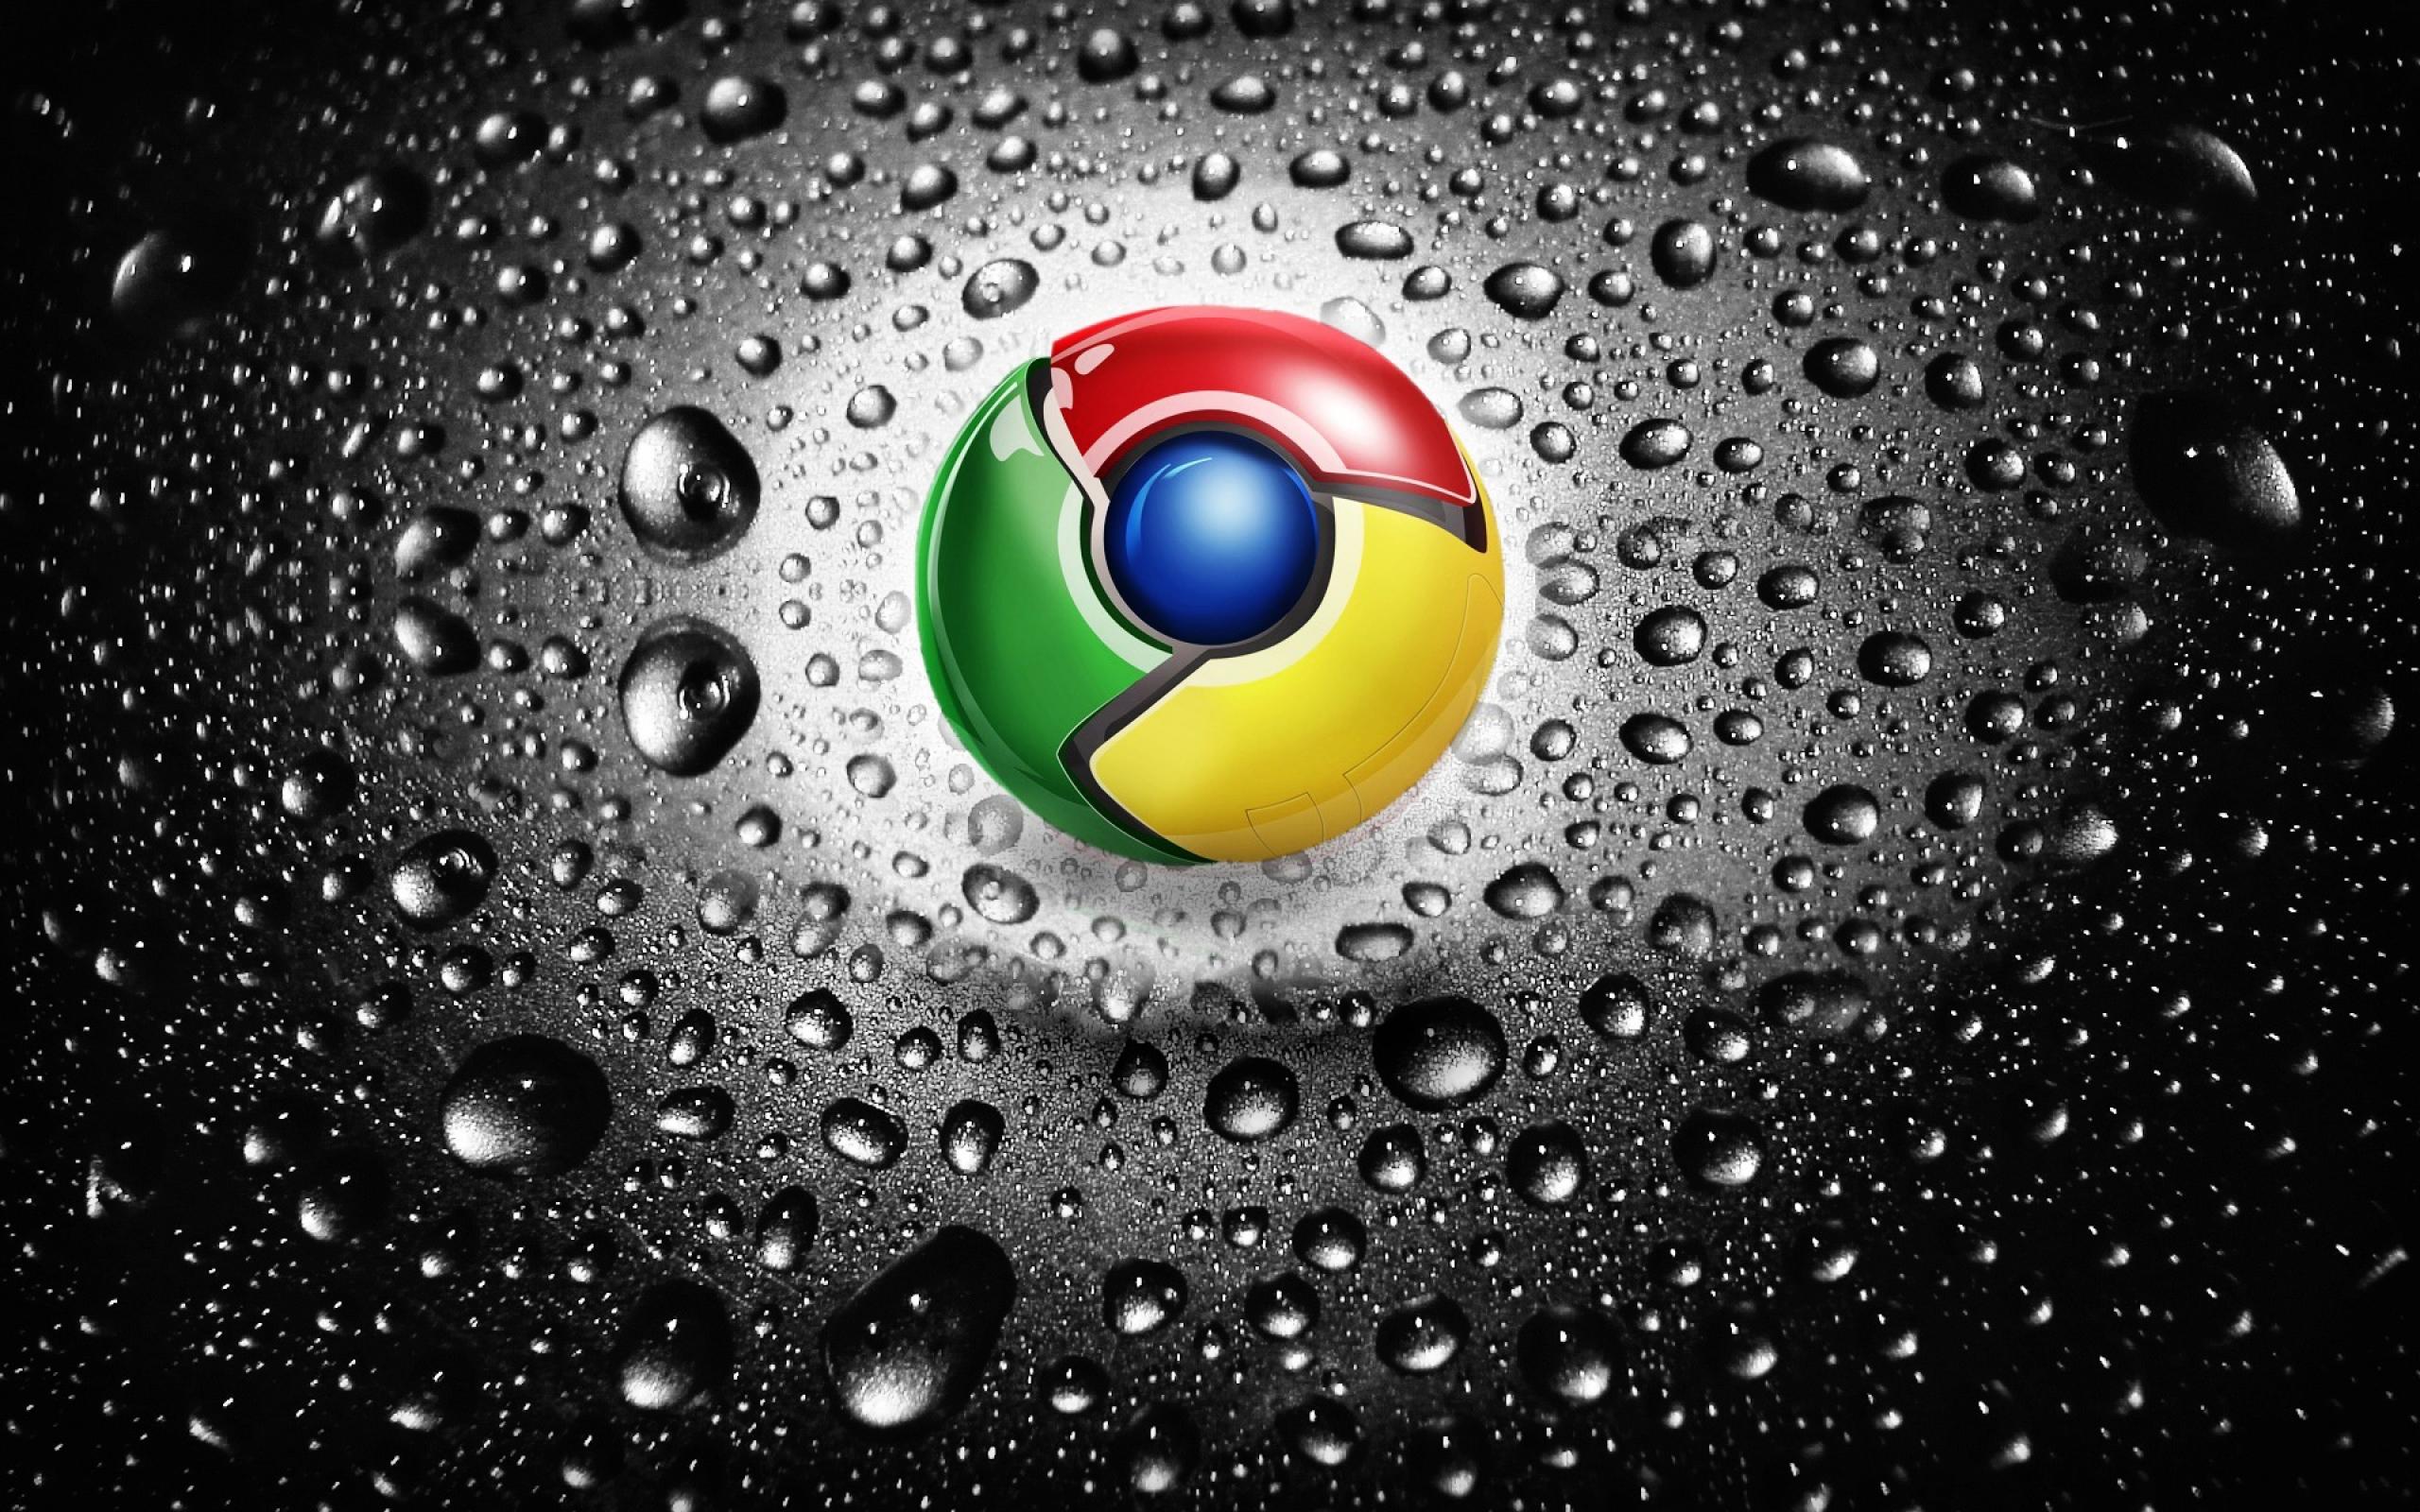 Google Chrome Water Drops Pc Wallpaper Hd Wallpeper Hd